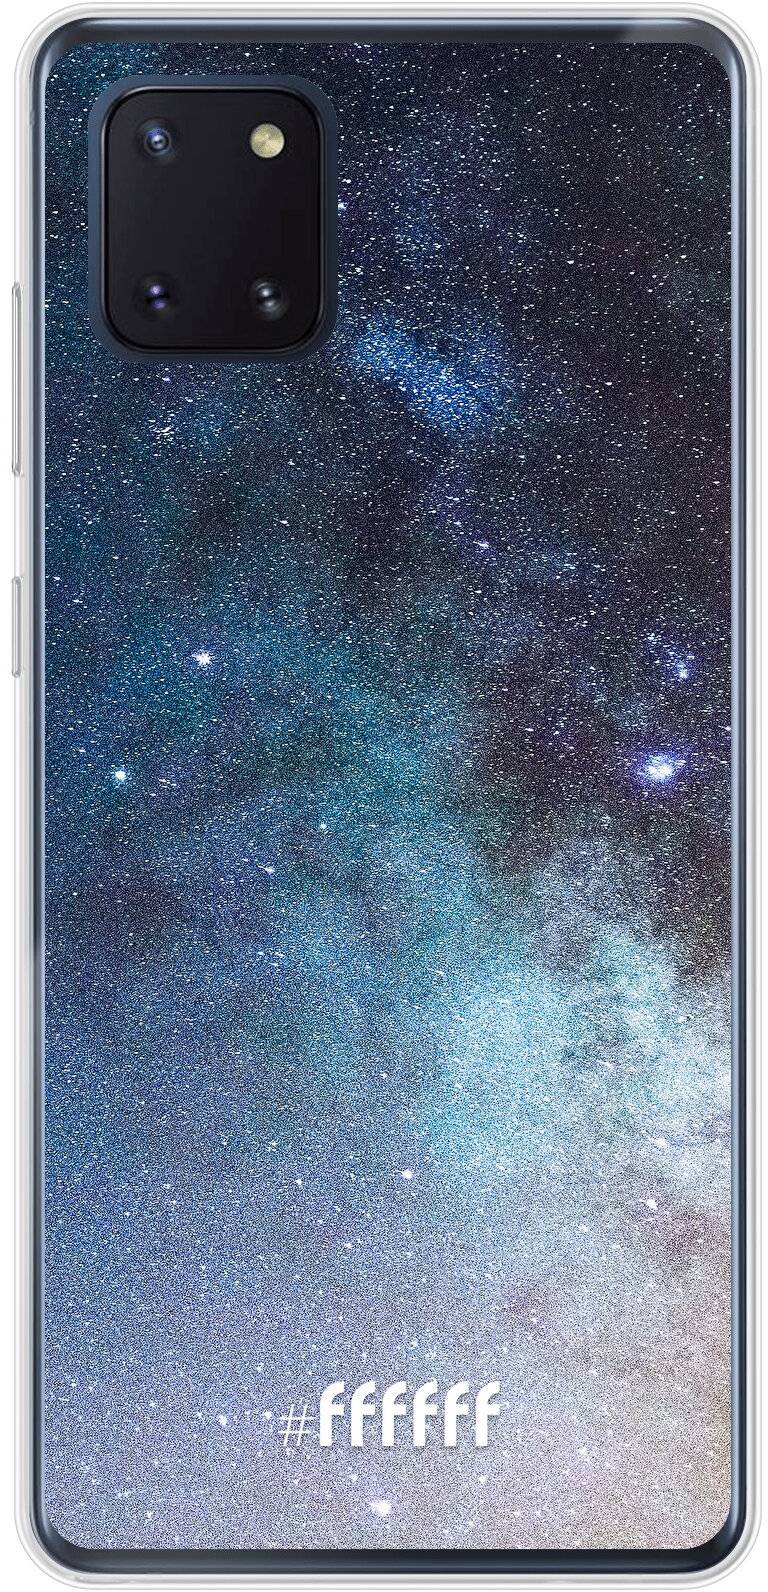 Milky Way Galaxy Note 10 Lite